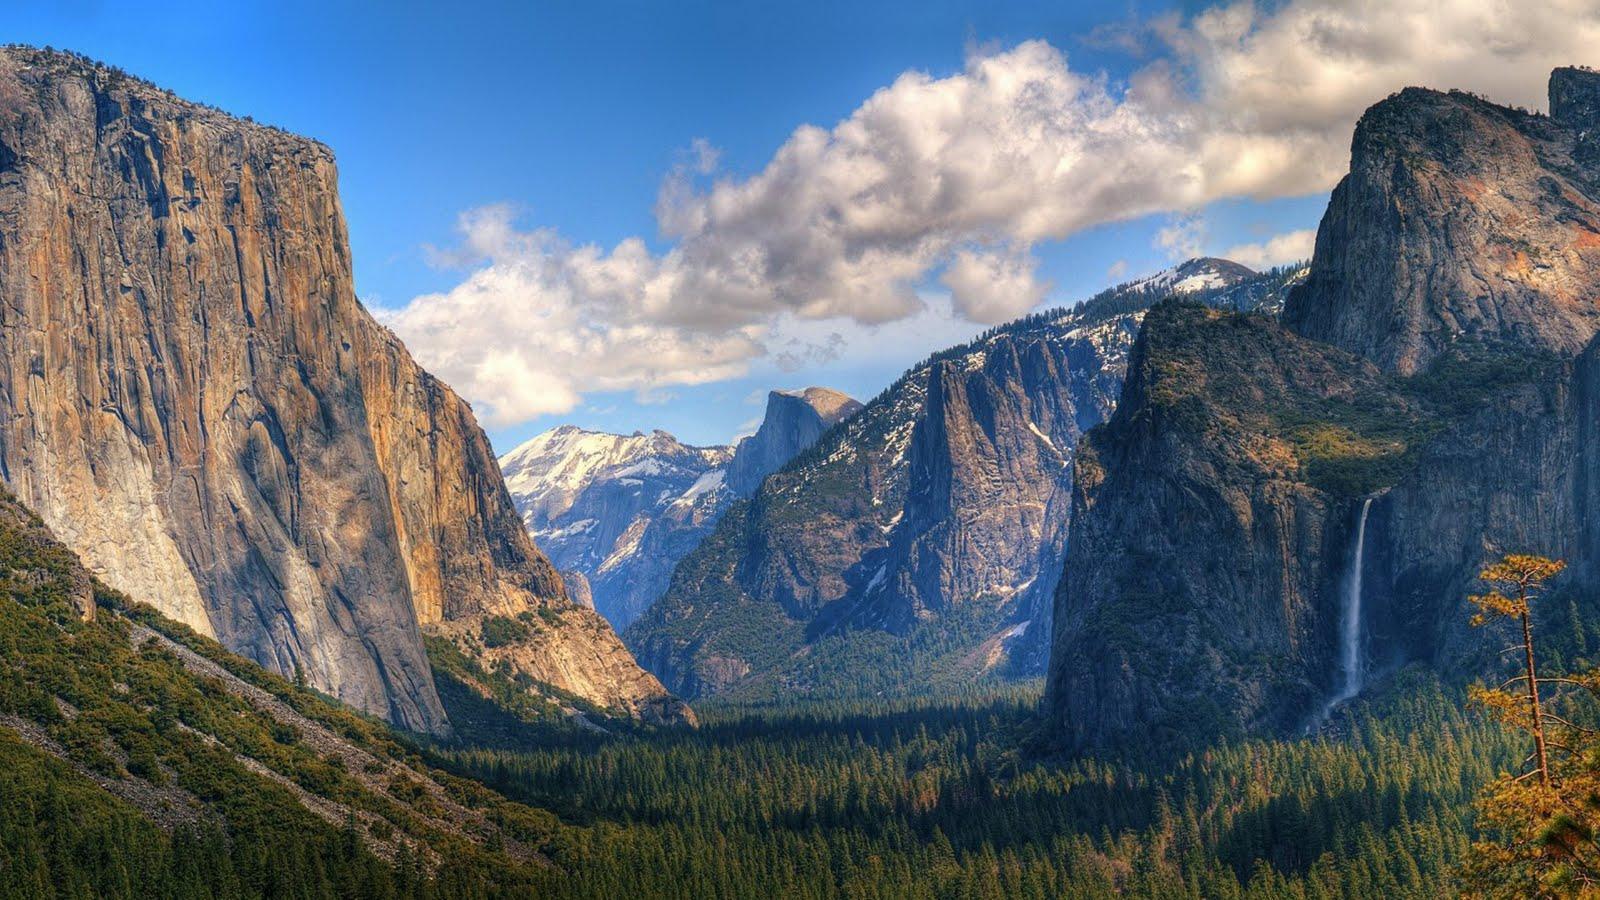 Free Wallpaper for Deskx1080 HDTV 1080p: Yosemite Valley